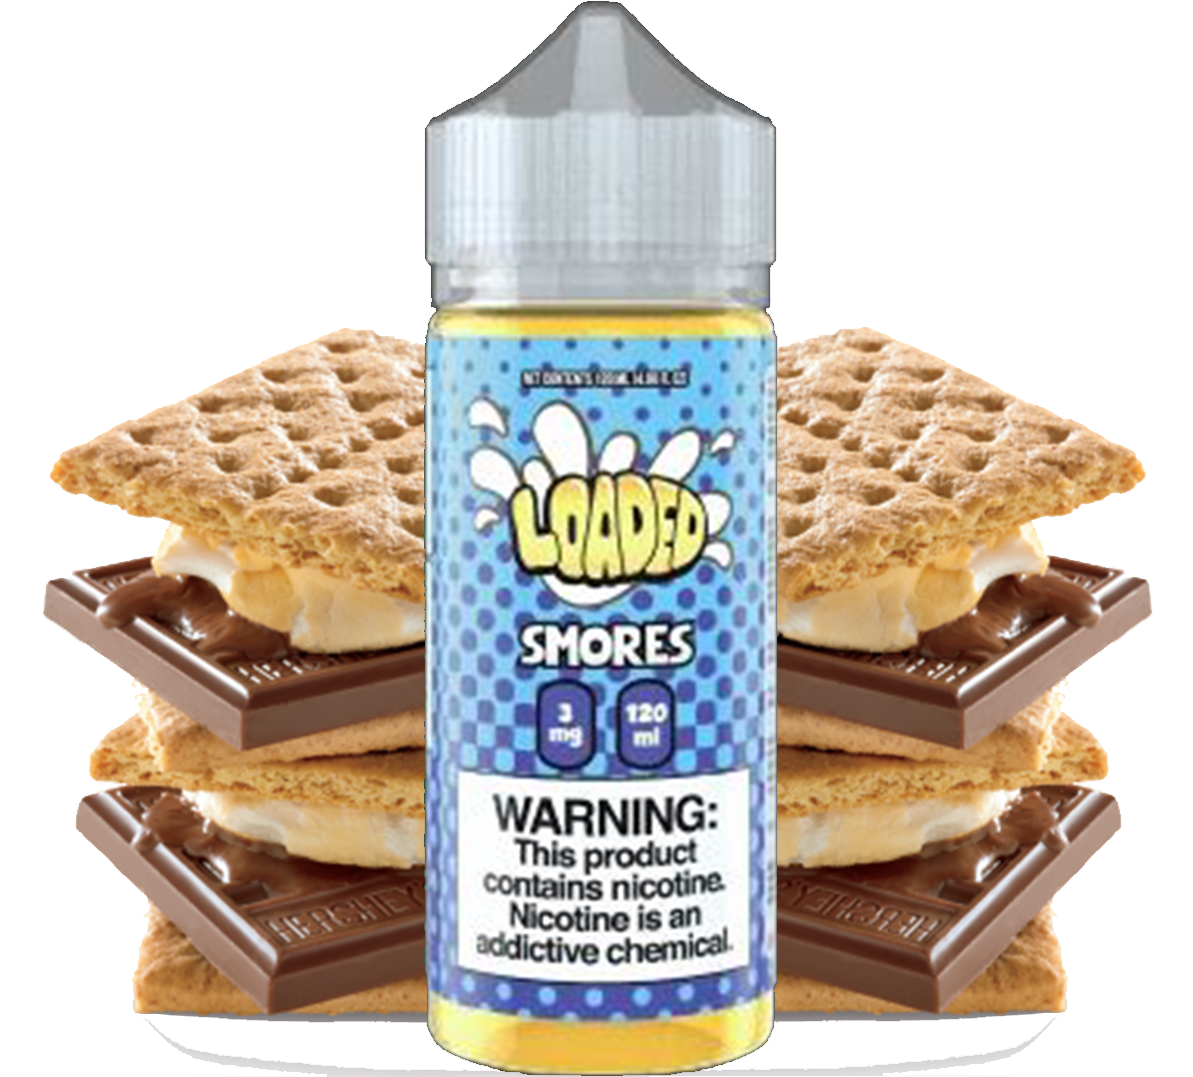 Loaded - Smores - 120ML Vape Juice - Chocolate Marshmallow Graham Cracker Flavor